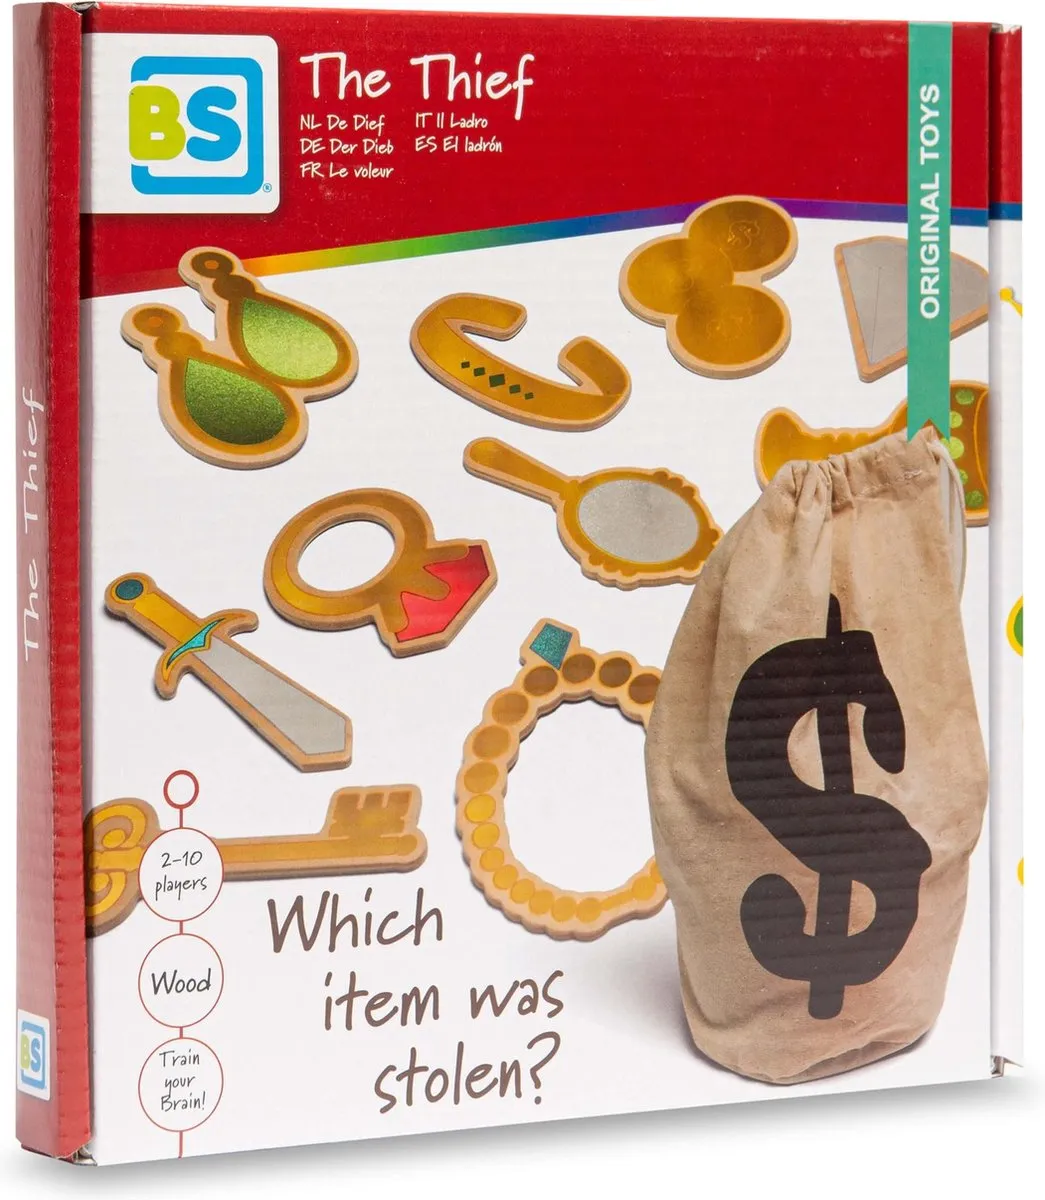 BS Toys The Thief Spel - De Dief - Buiten en Binnenspeelgoed - Educatief Speelgoed - Kinderspel - 2-10 Spelers speelgoed